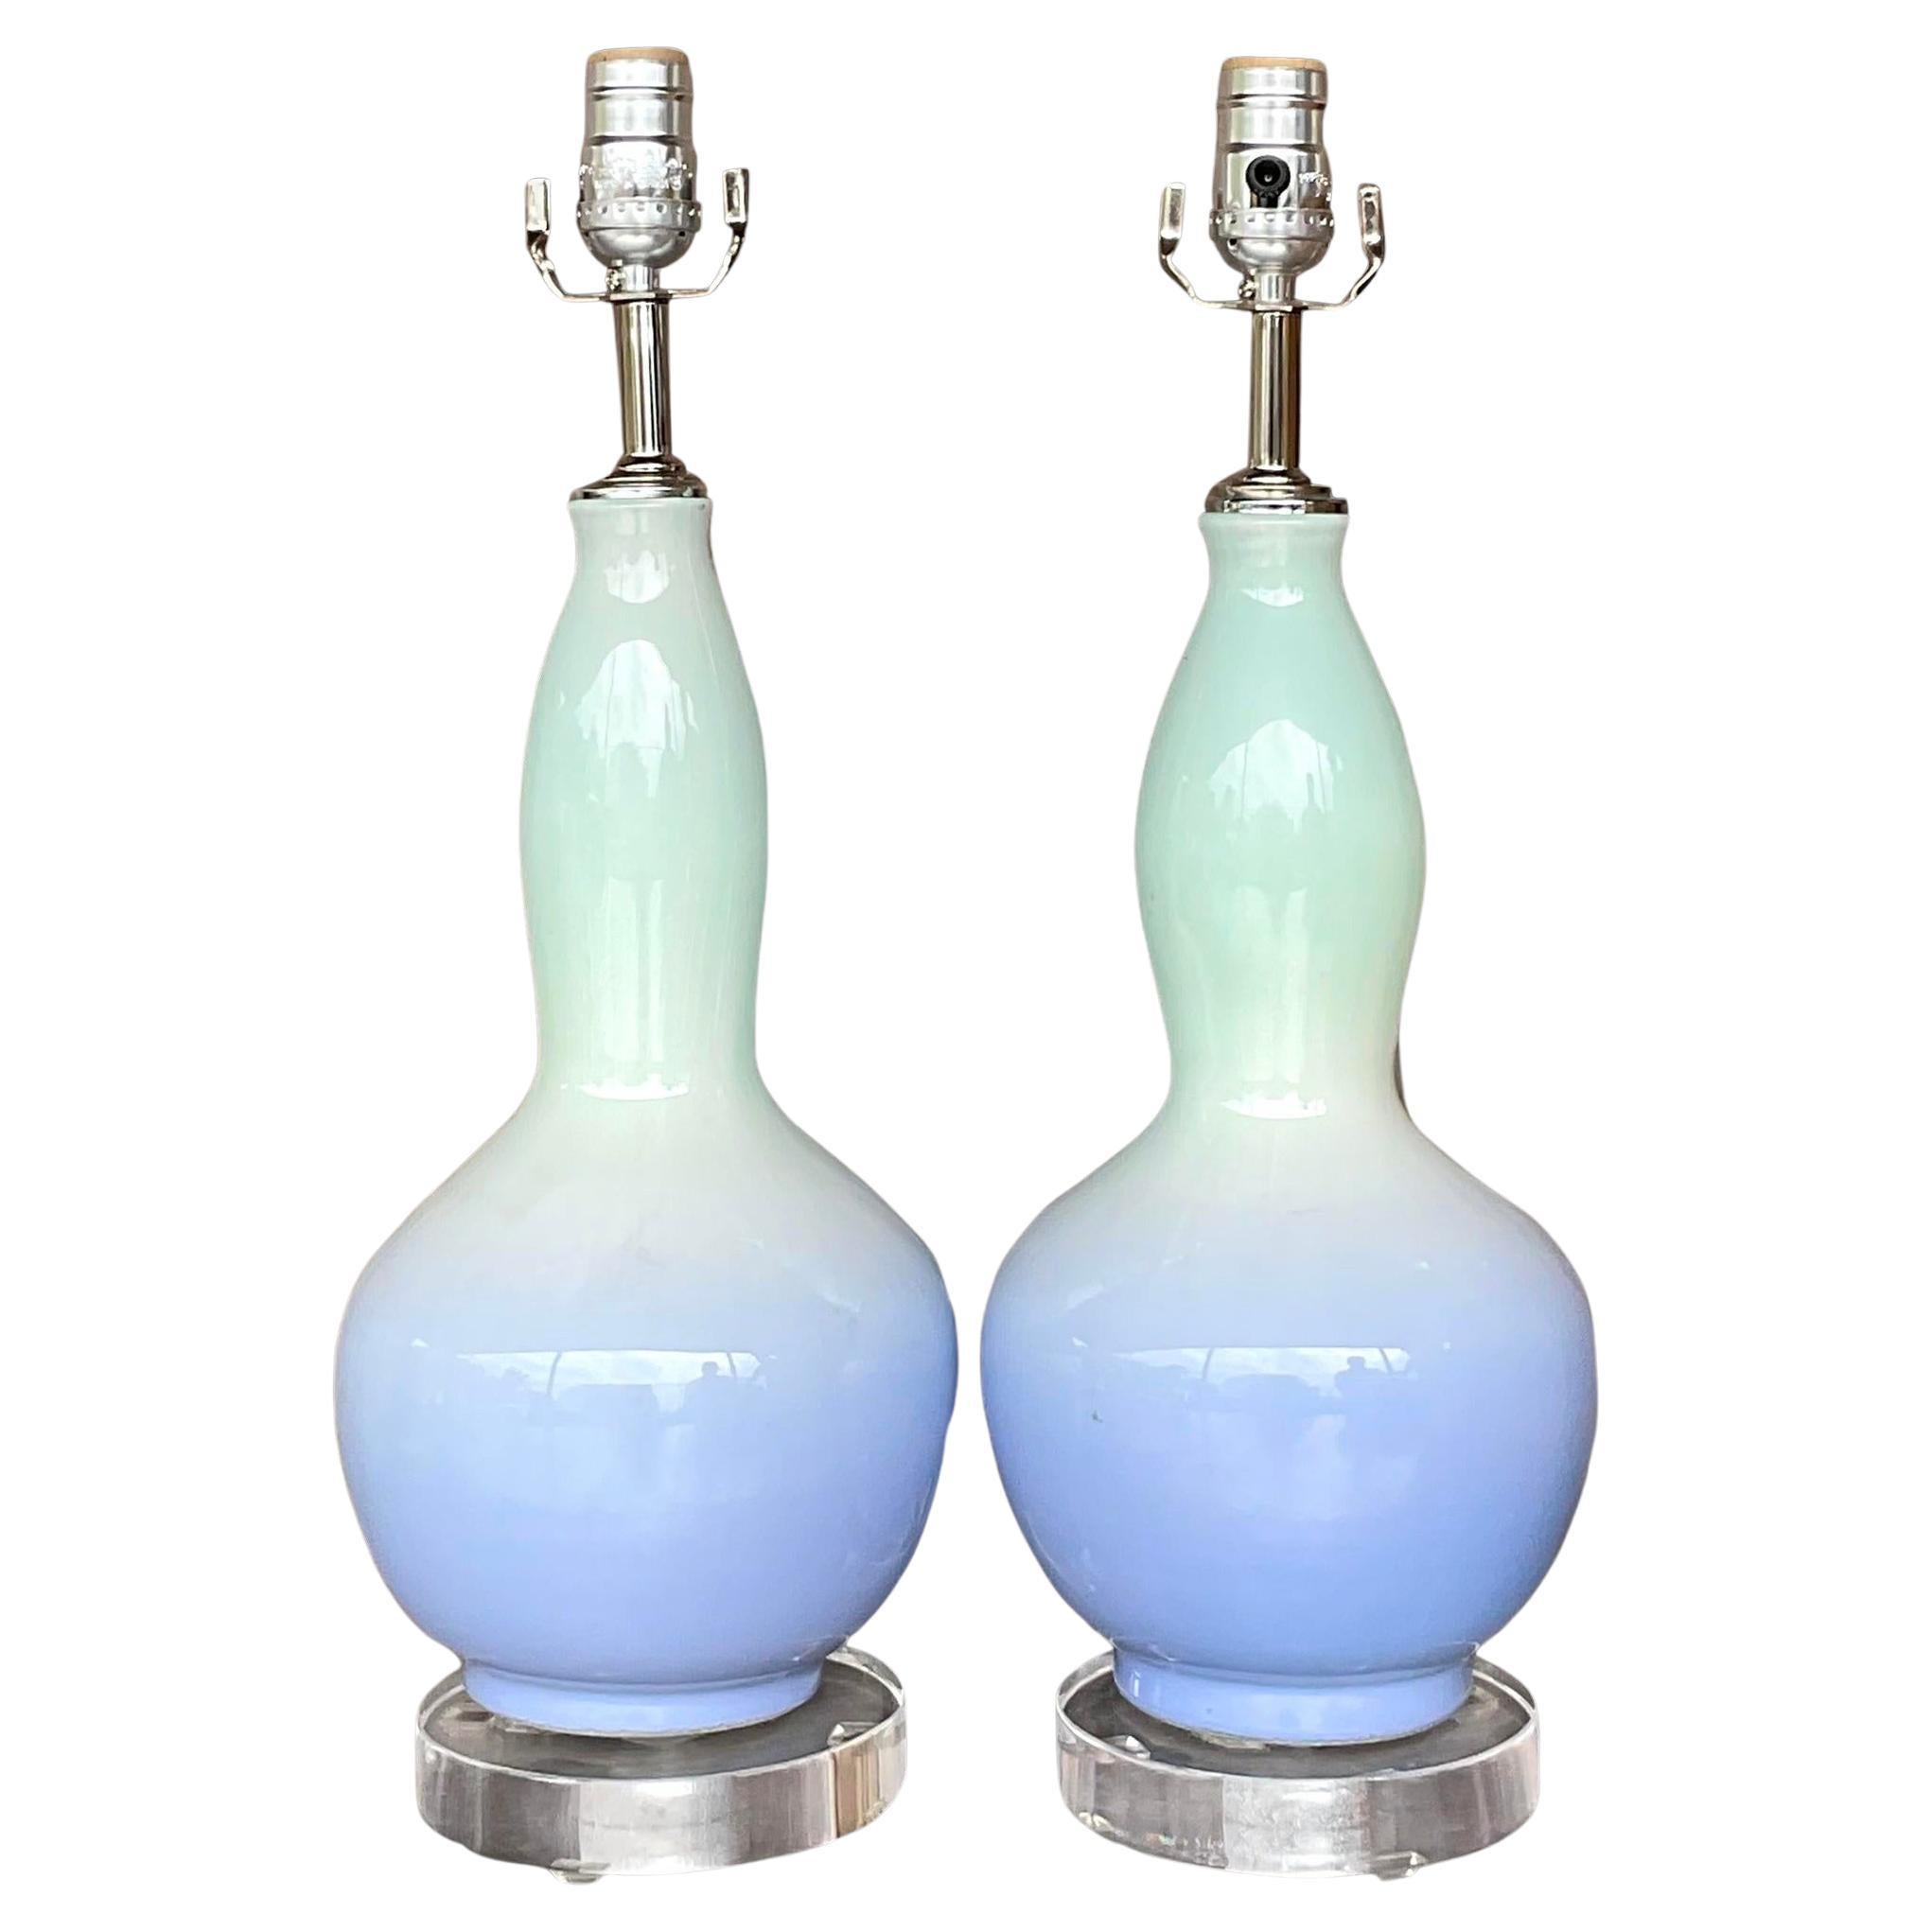 Vintage Regency Ombre-Glaslampen im Regency-Stil - ein Paar